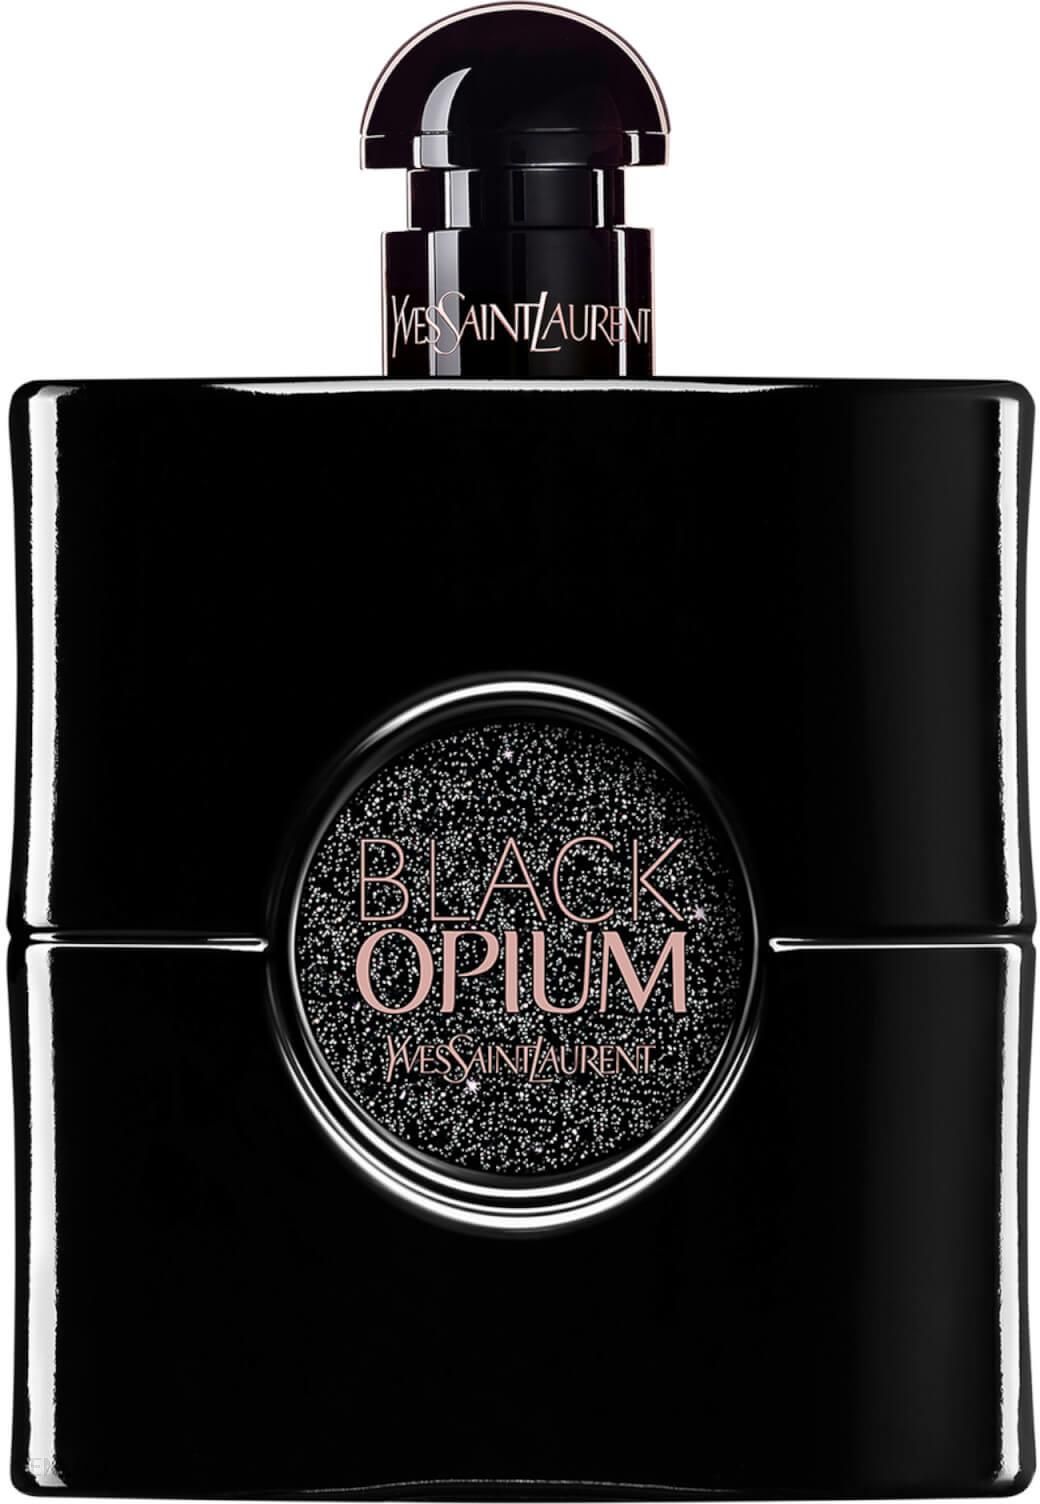 Yves Saint Laurent X Black Opium Le Parfum 90 ml